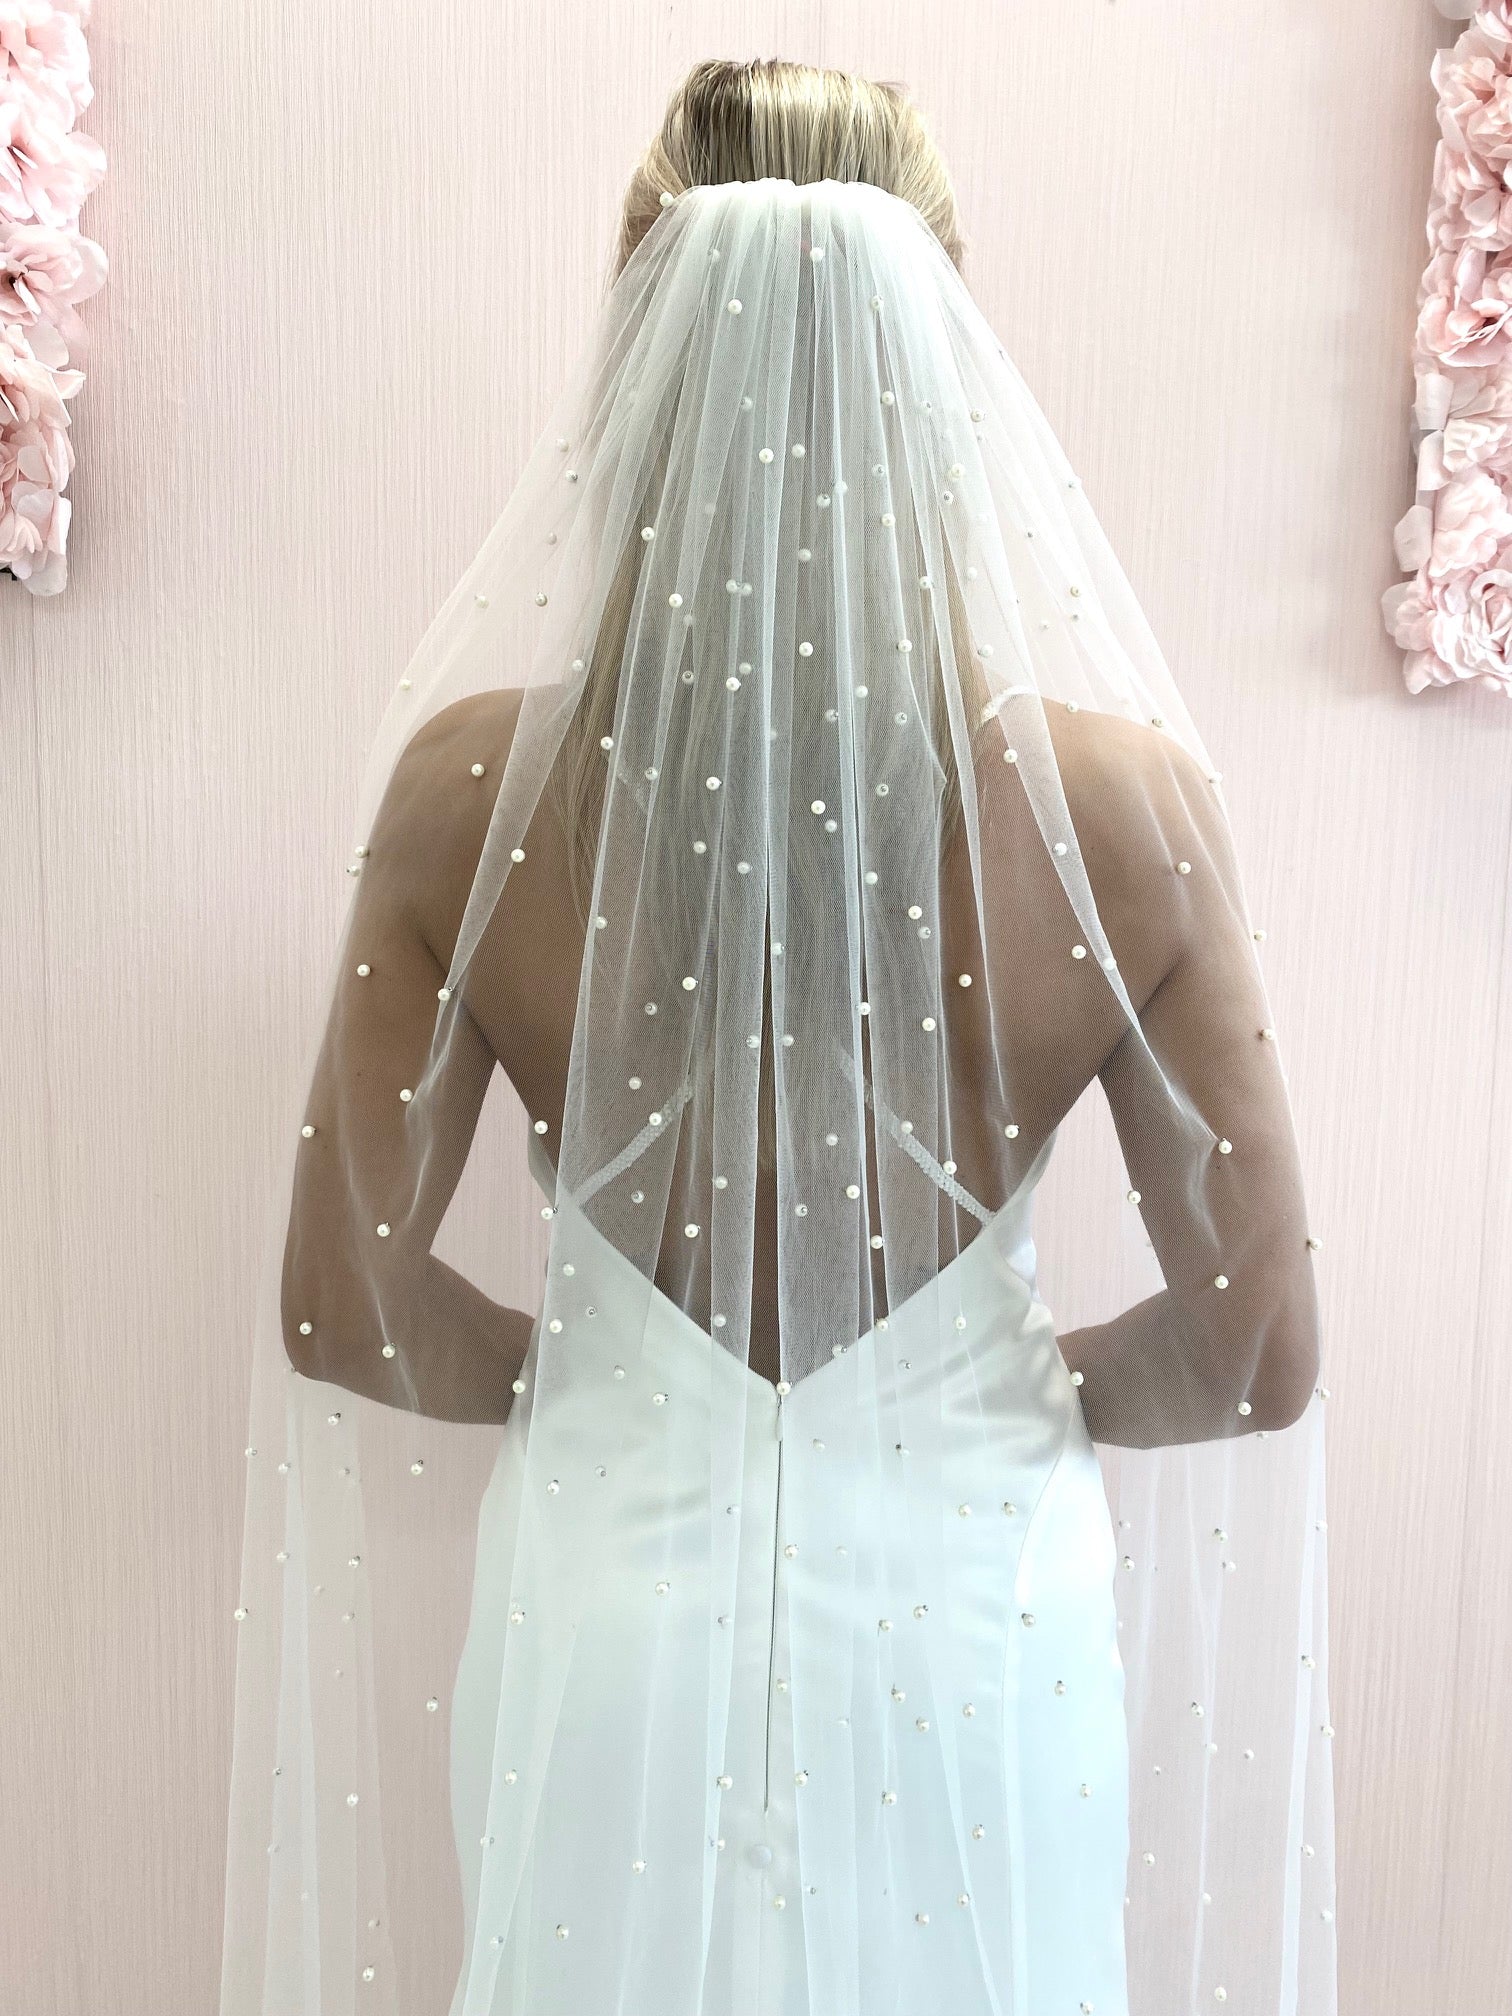 PetJos Wedding Veil, Tulle Bridal Veil Wedding Long Veil, Bride Wedding Veil, White, Ivory Cathedral Long Veil, Simple